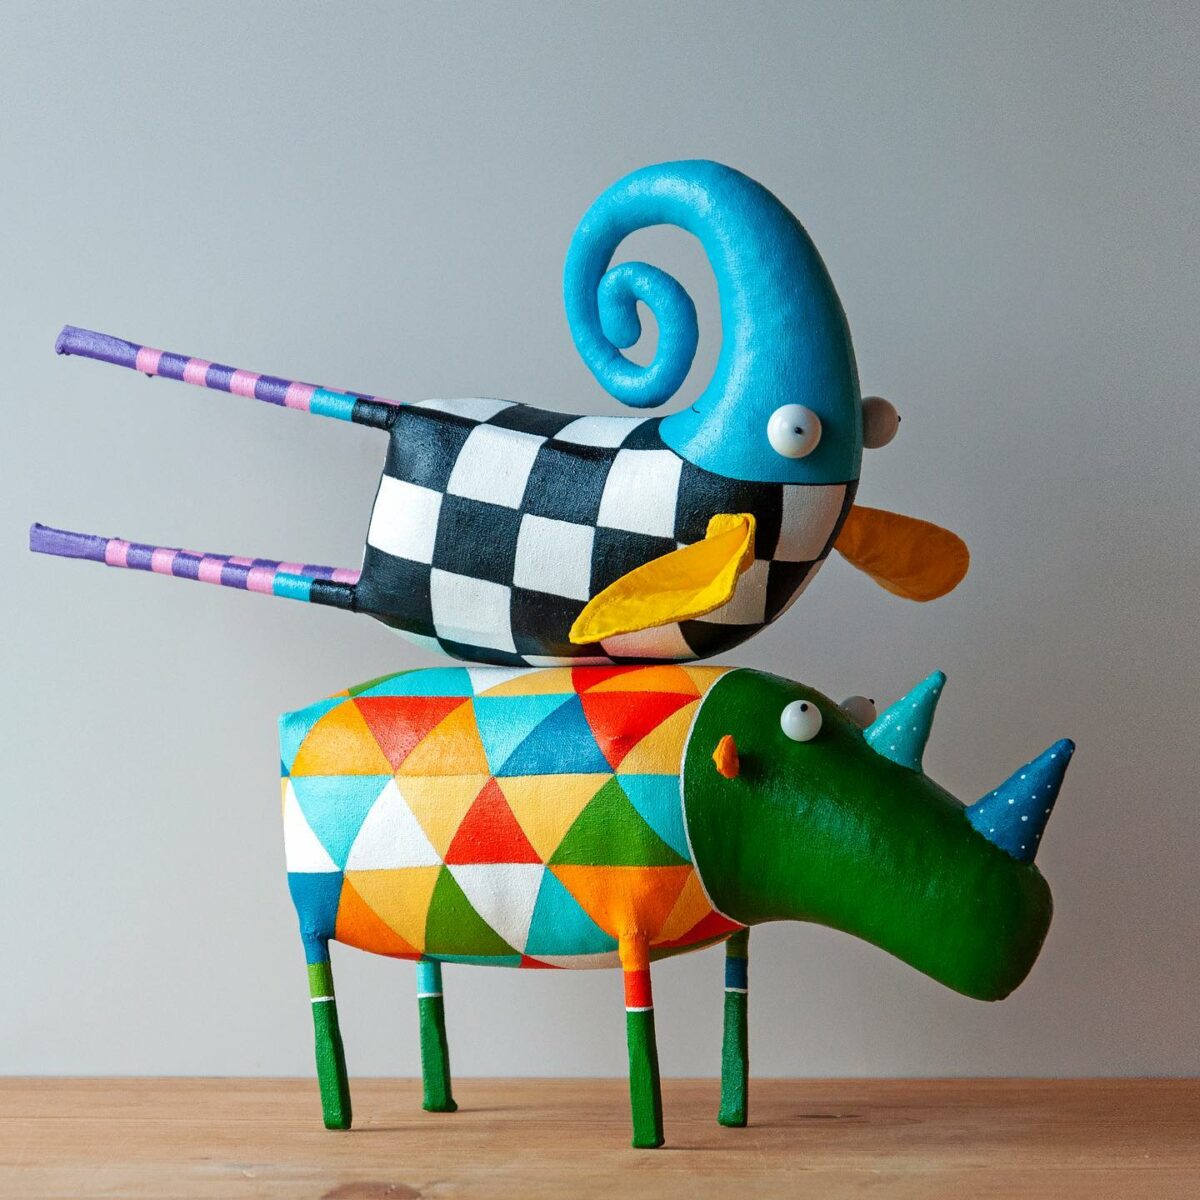 Colorful handmade toys of quirky creatures by Lidiya Marinchuk